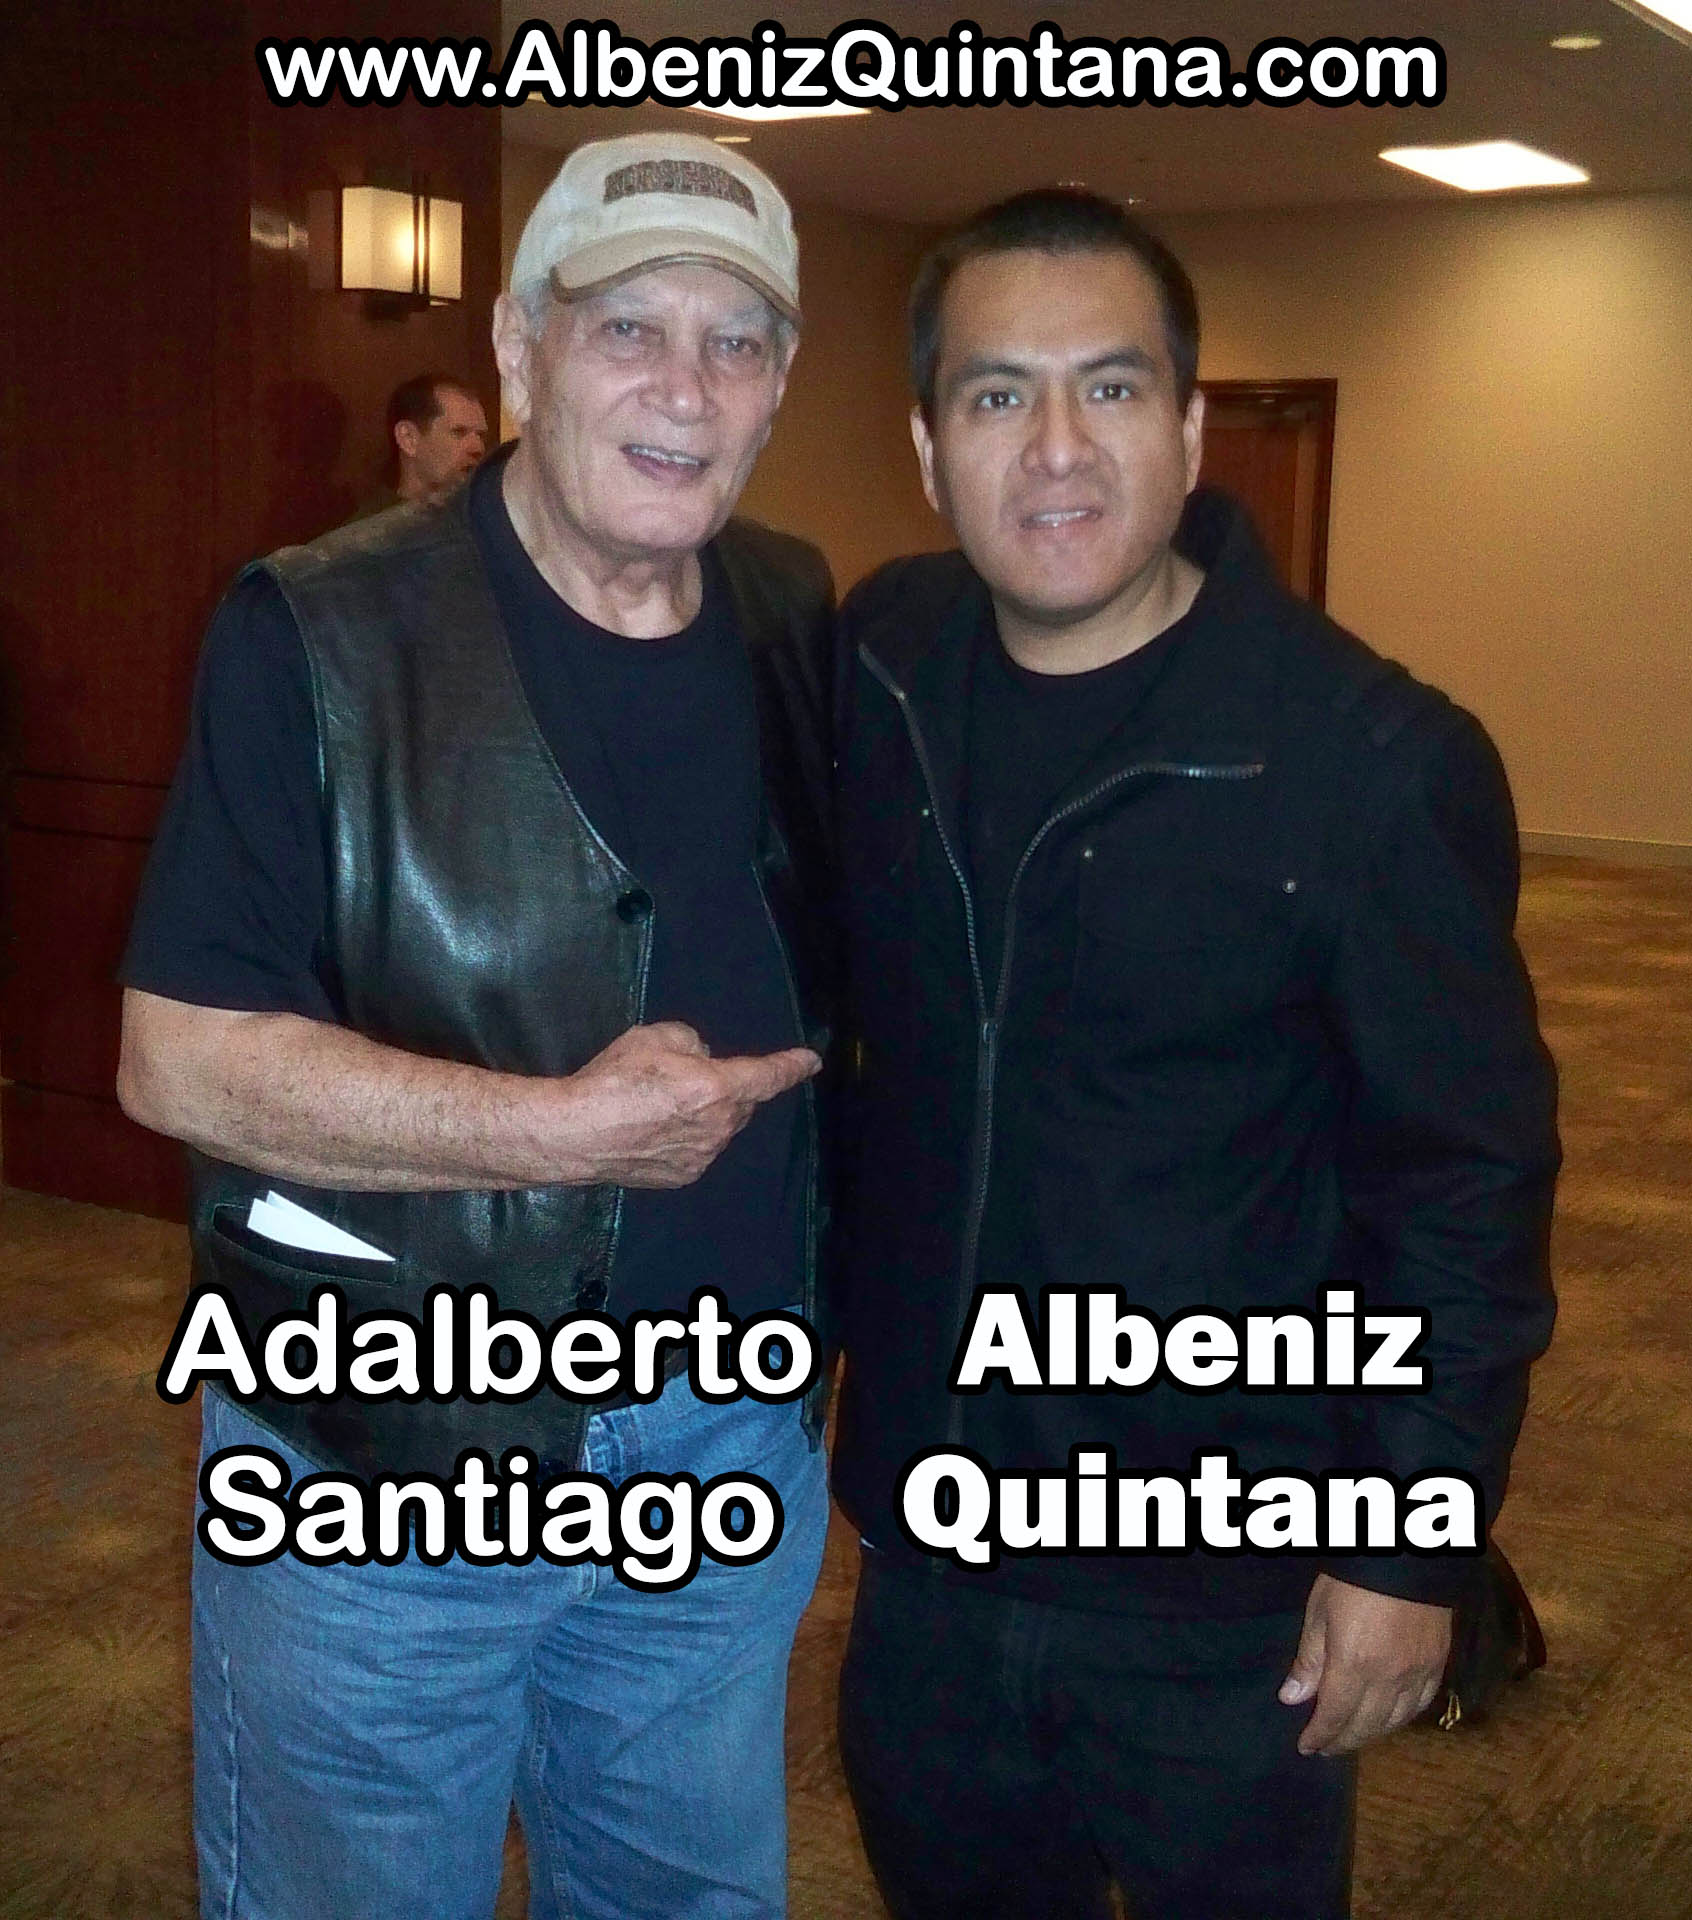 Albeniz Quintana, Salsa Piano Solo, Salsa Piano Montuno, Salsa Bass Tumbao, Latin Sheet Music